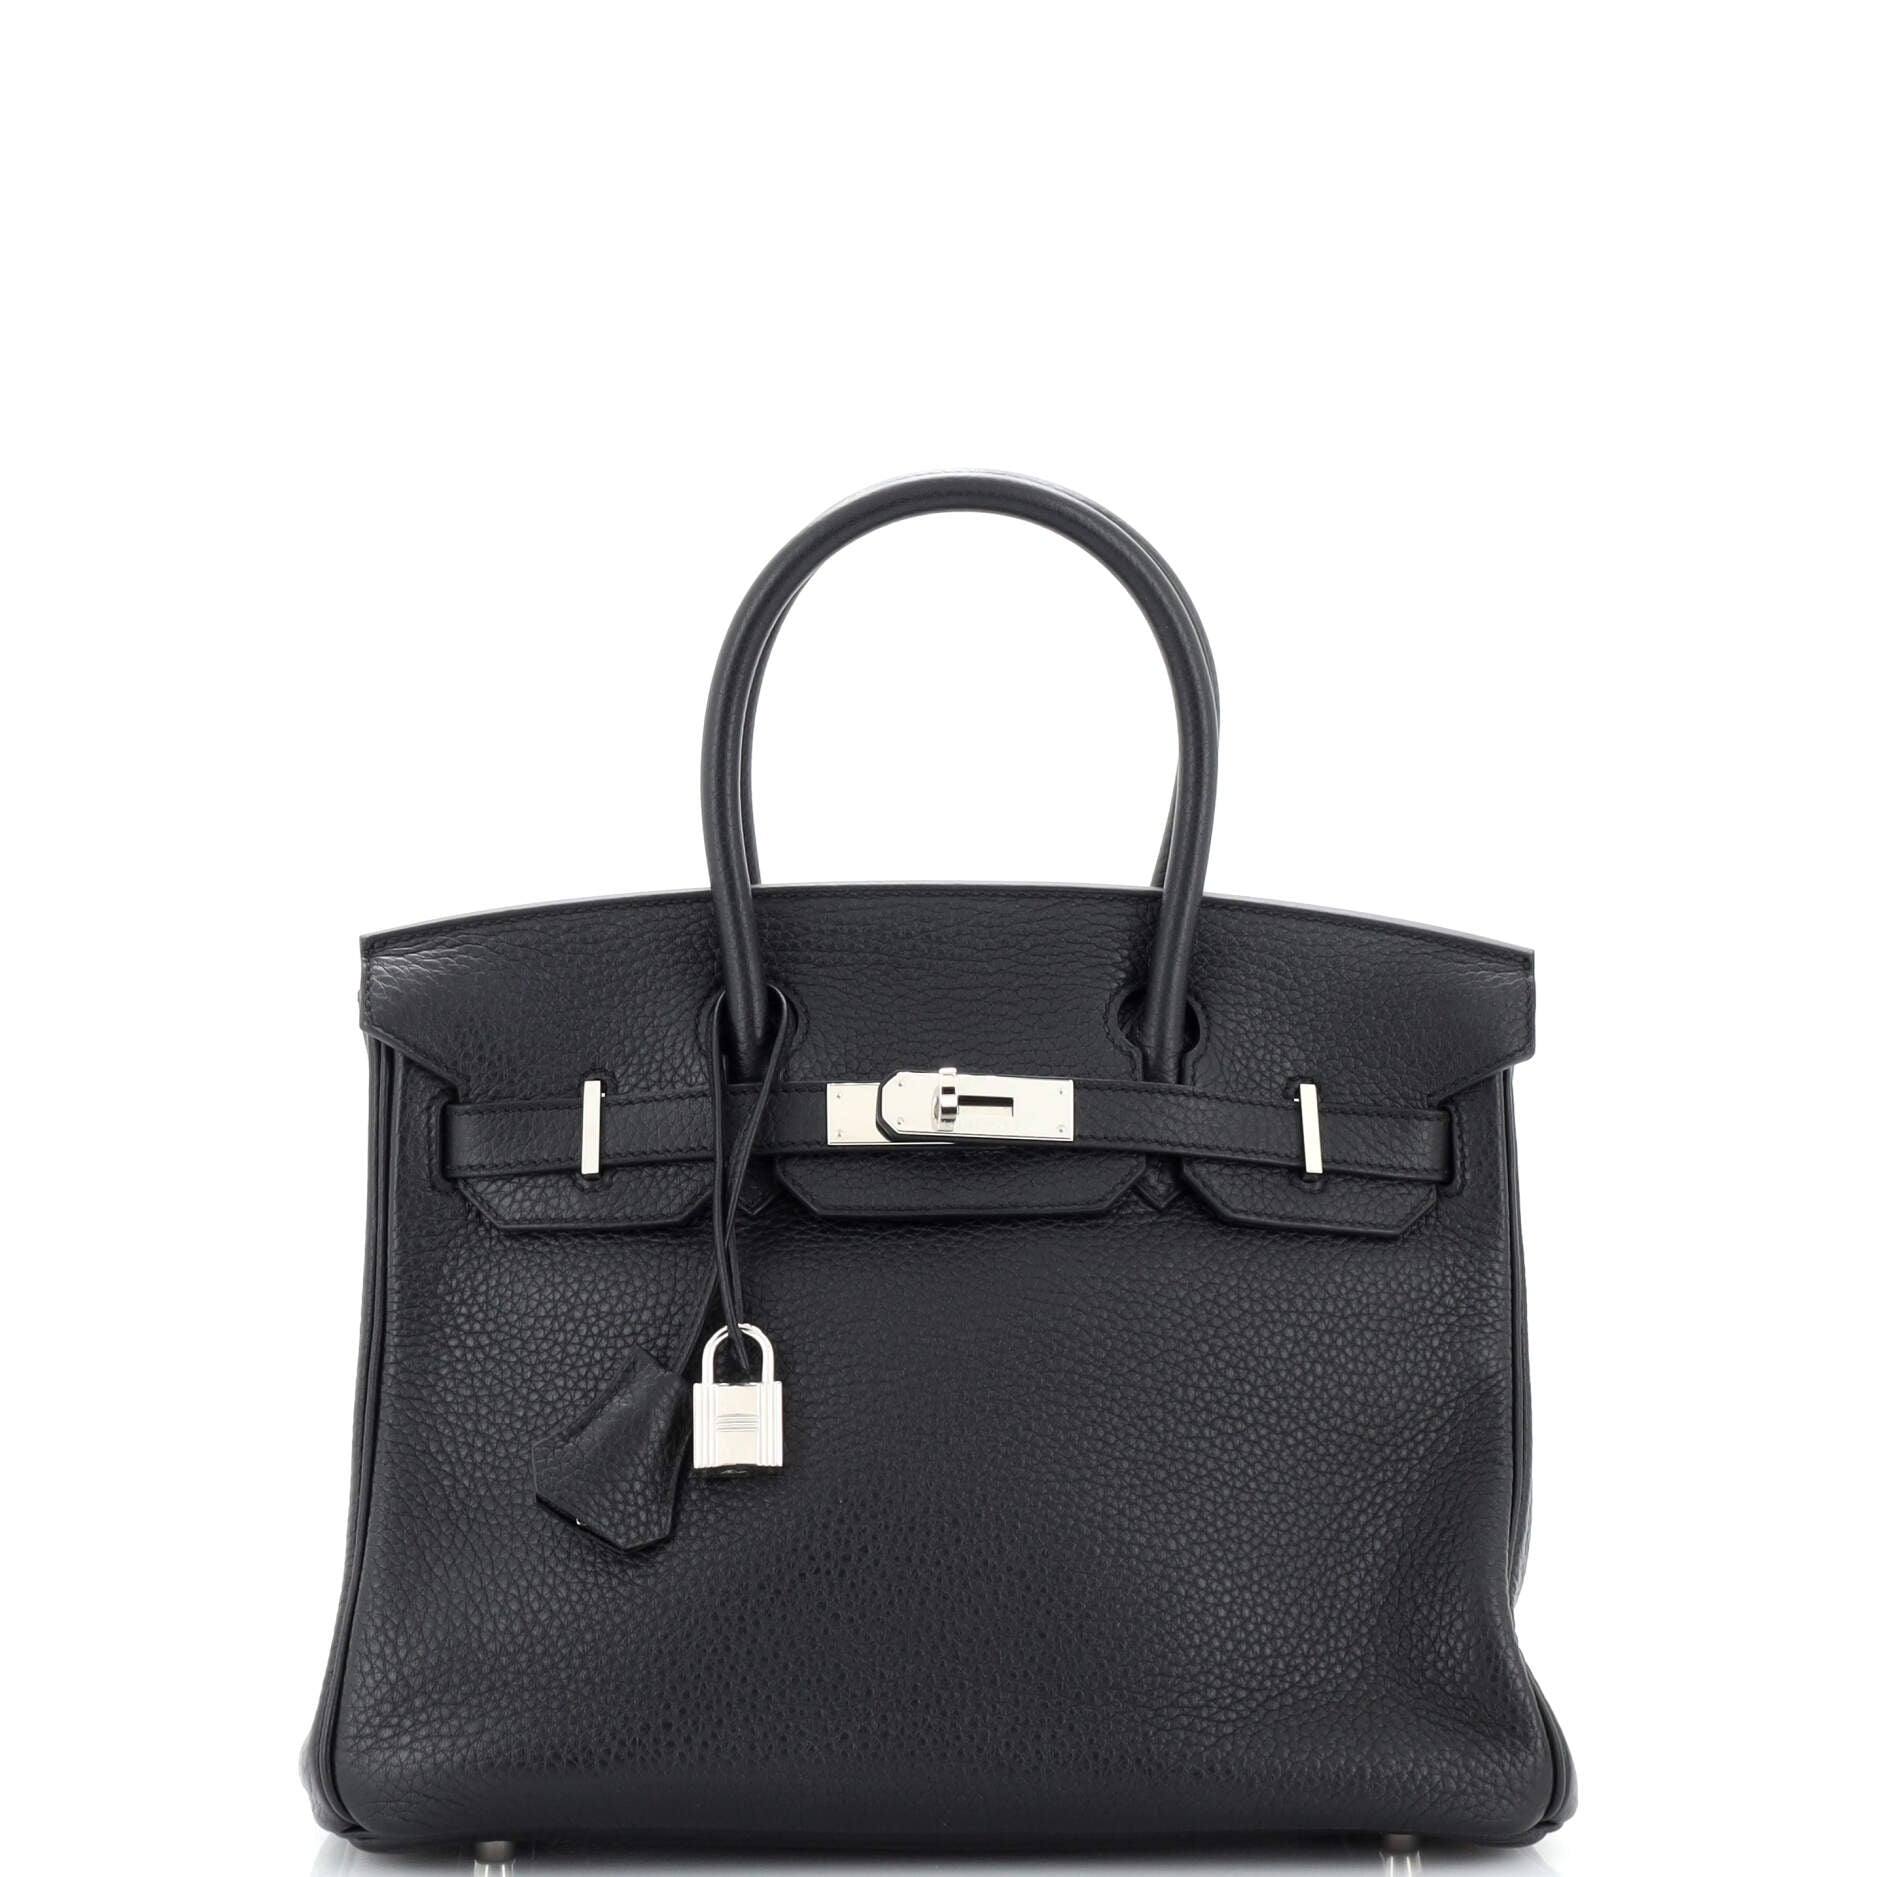 Birkin Handbag Noir Clemence with Palladium Hardware 30